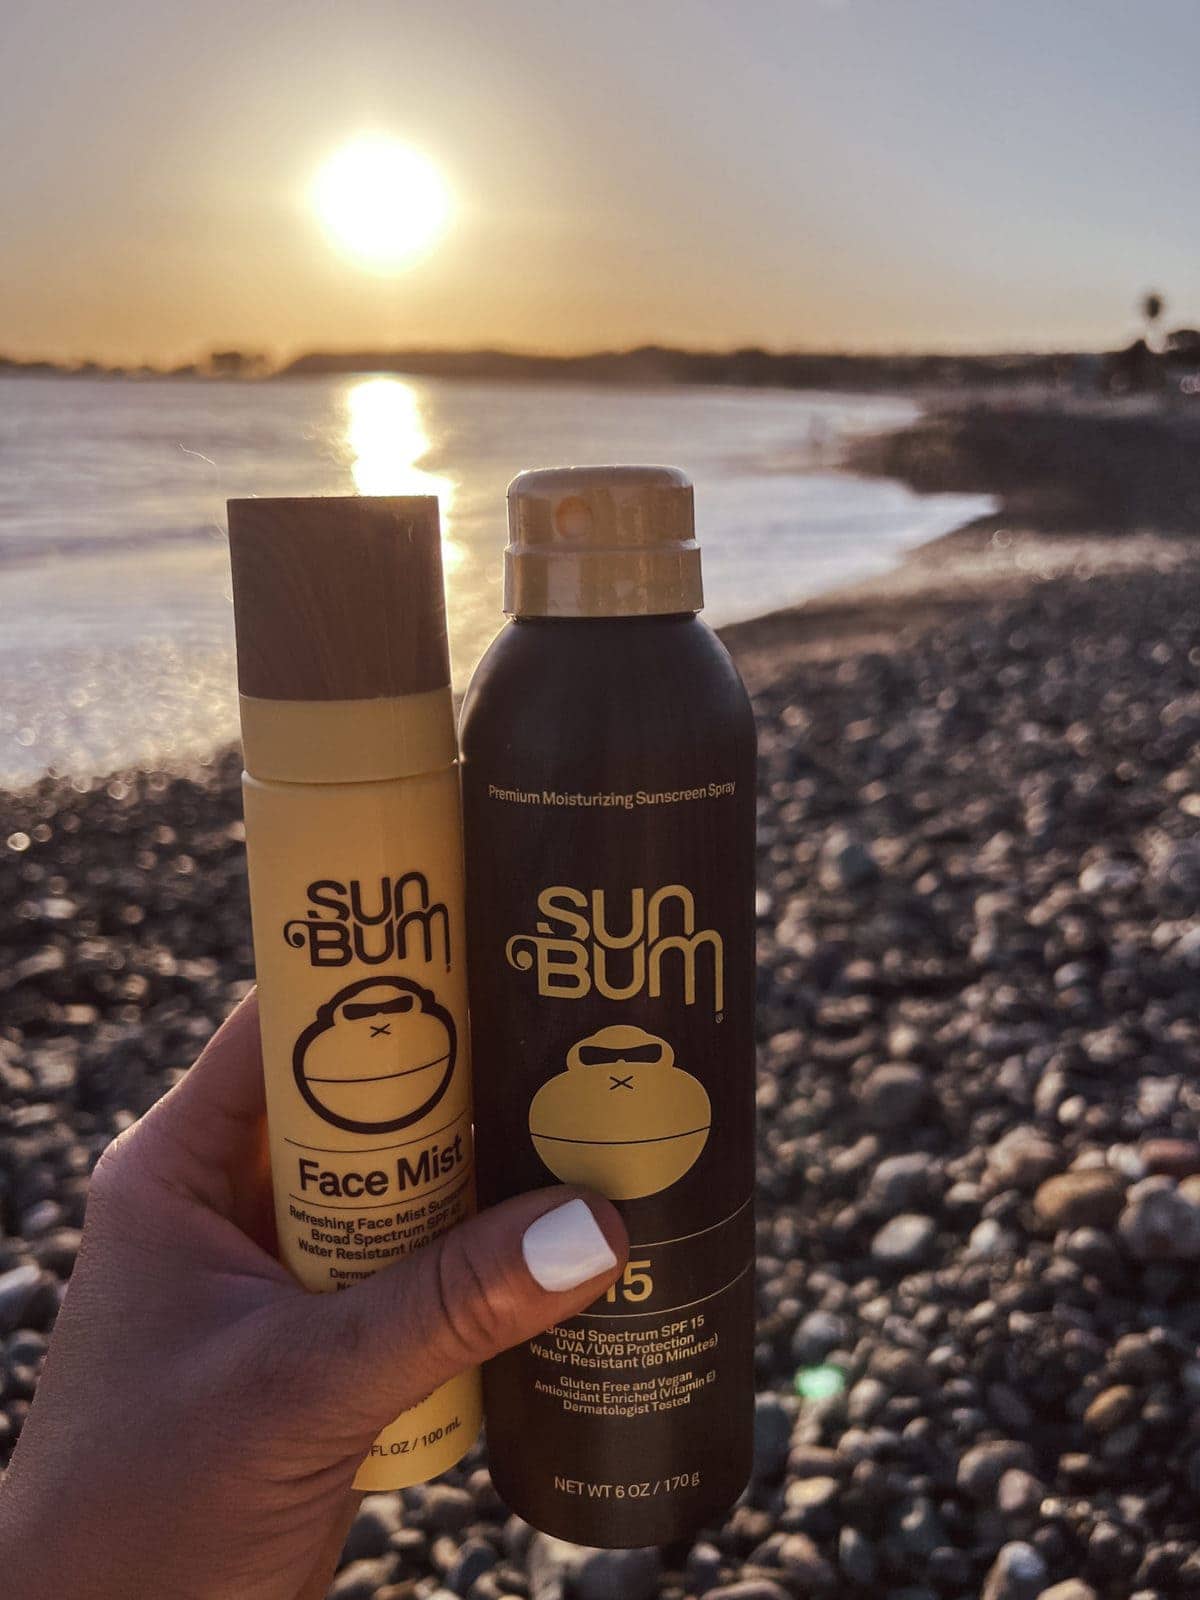 sun bum products